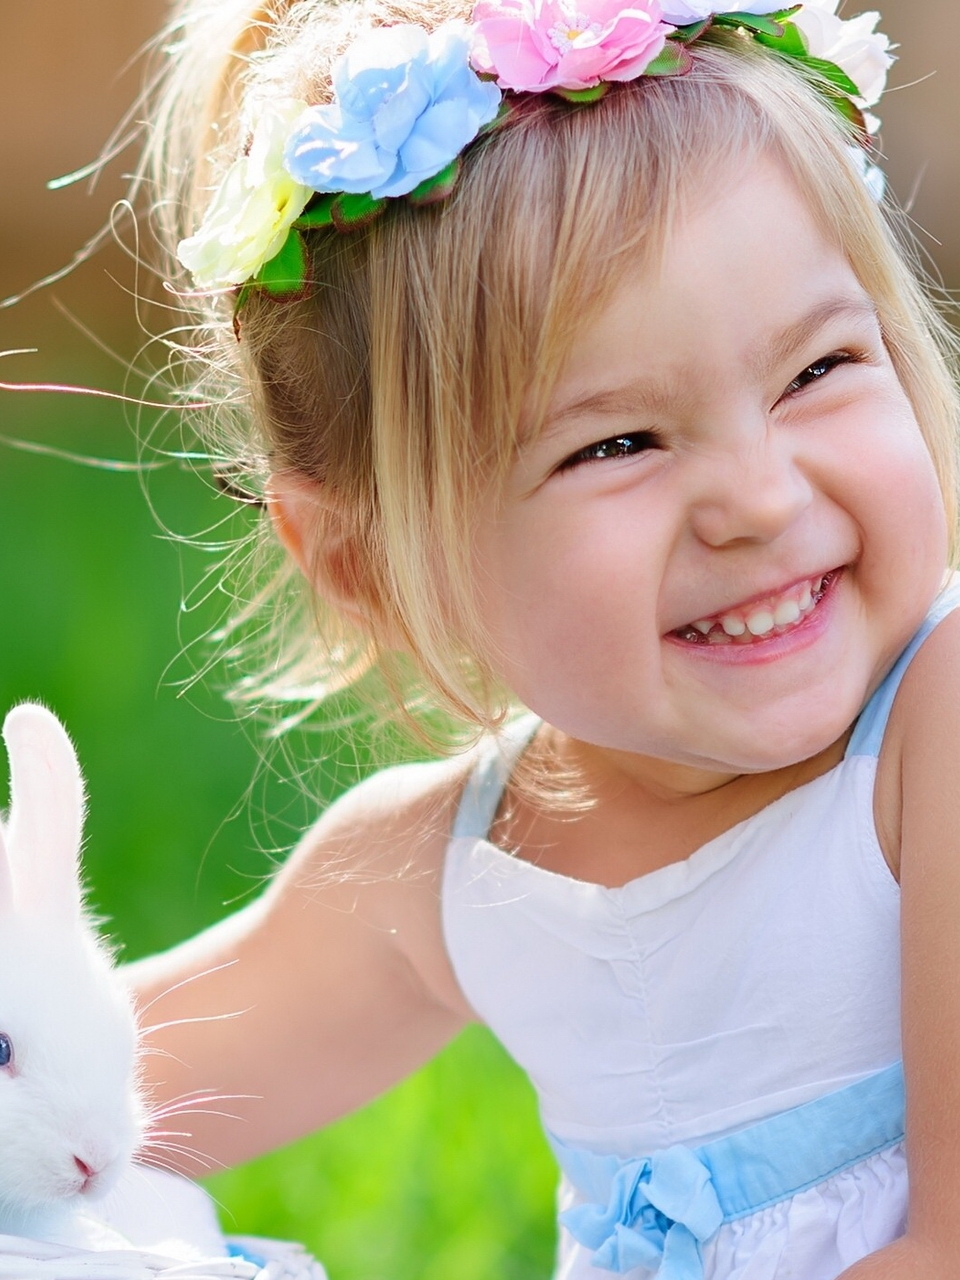 Image: Girl, rabbit, happy, smile, nastroeniye